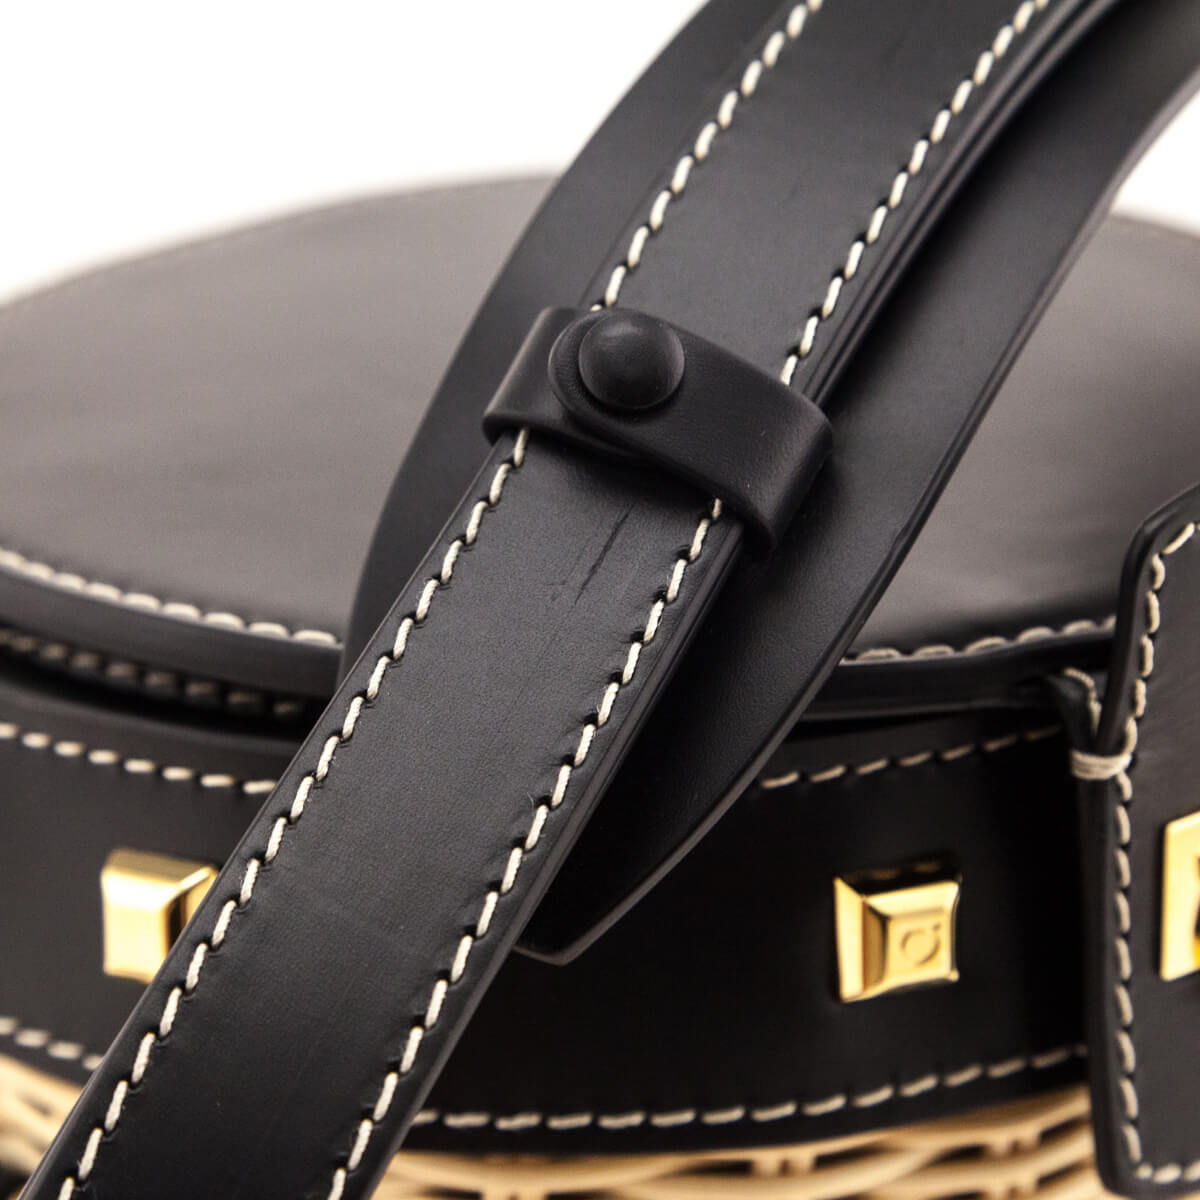 Ferragamo Black & Wicker Gancini Bucket Bag - Love that Bag etc - Preowned Authentic Designer Handbags & Preloved Fashions